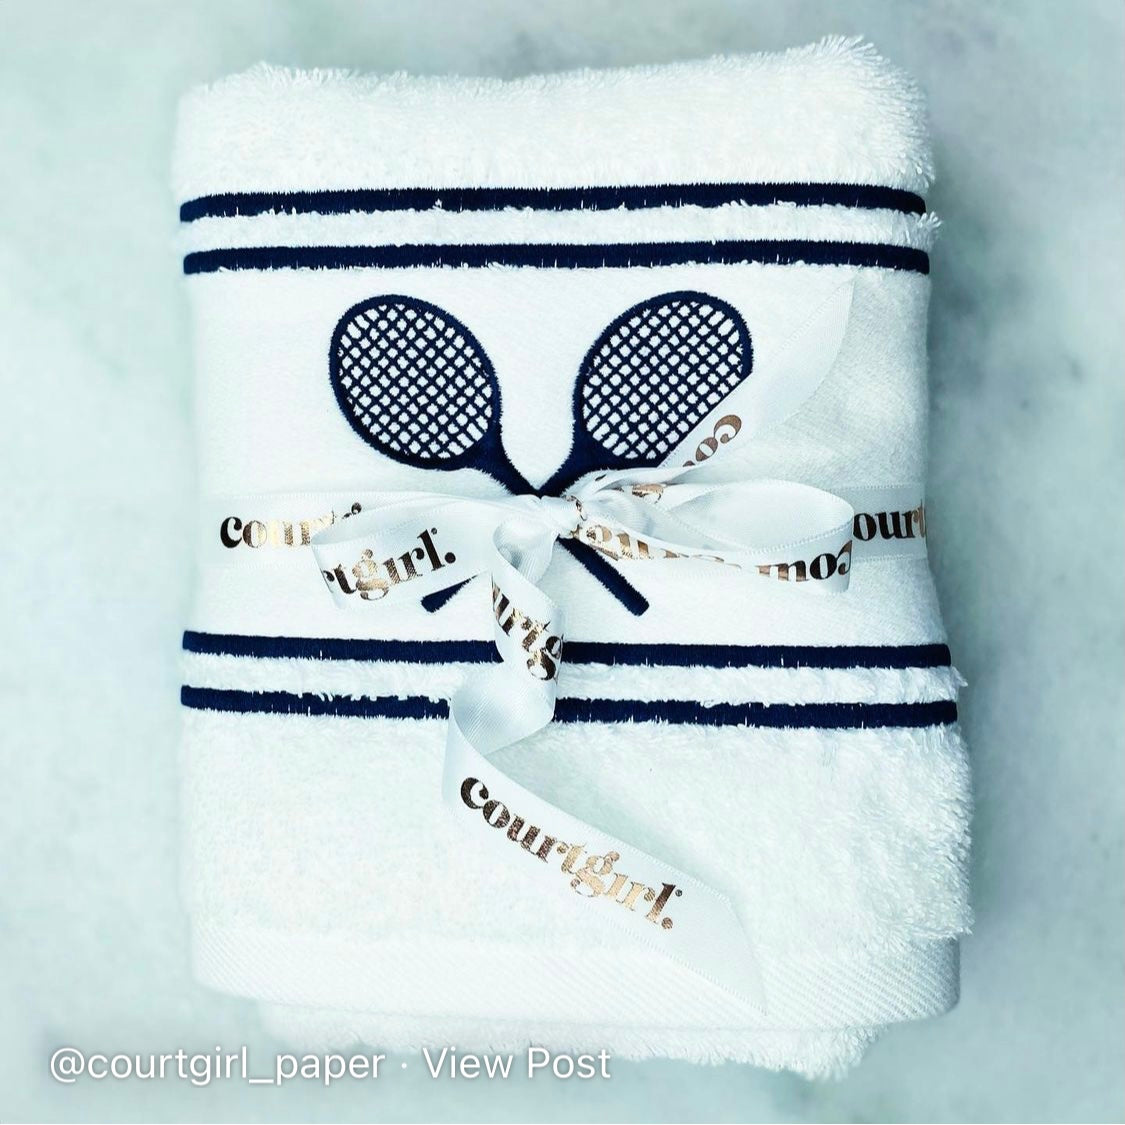 COURTGIRL Matchtime Towel